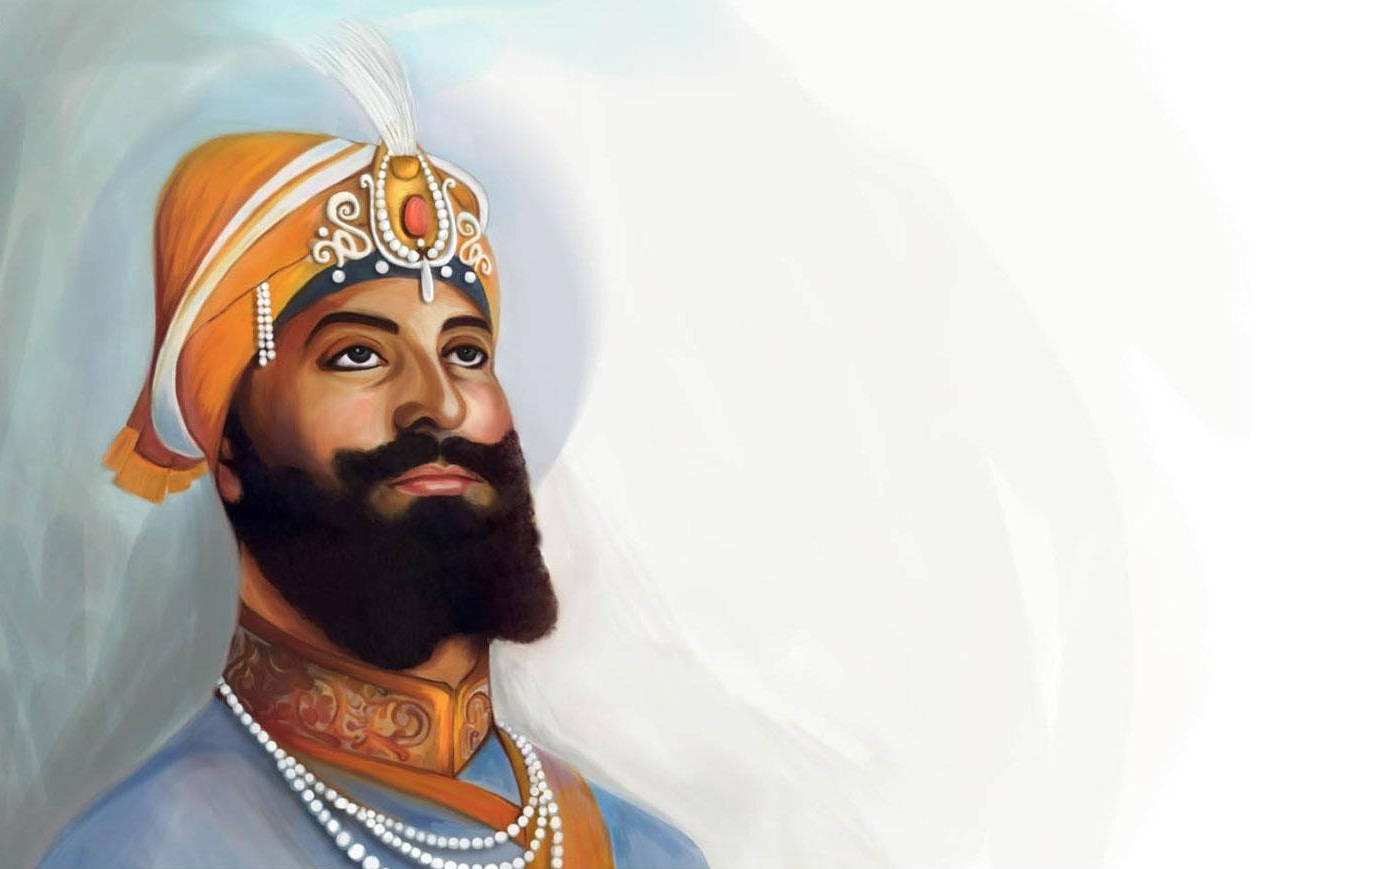 Guru Gobind Singh Ji Confident Portrait Background